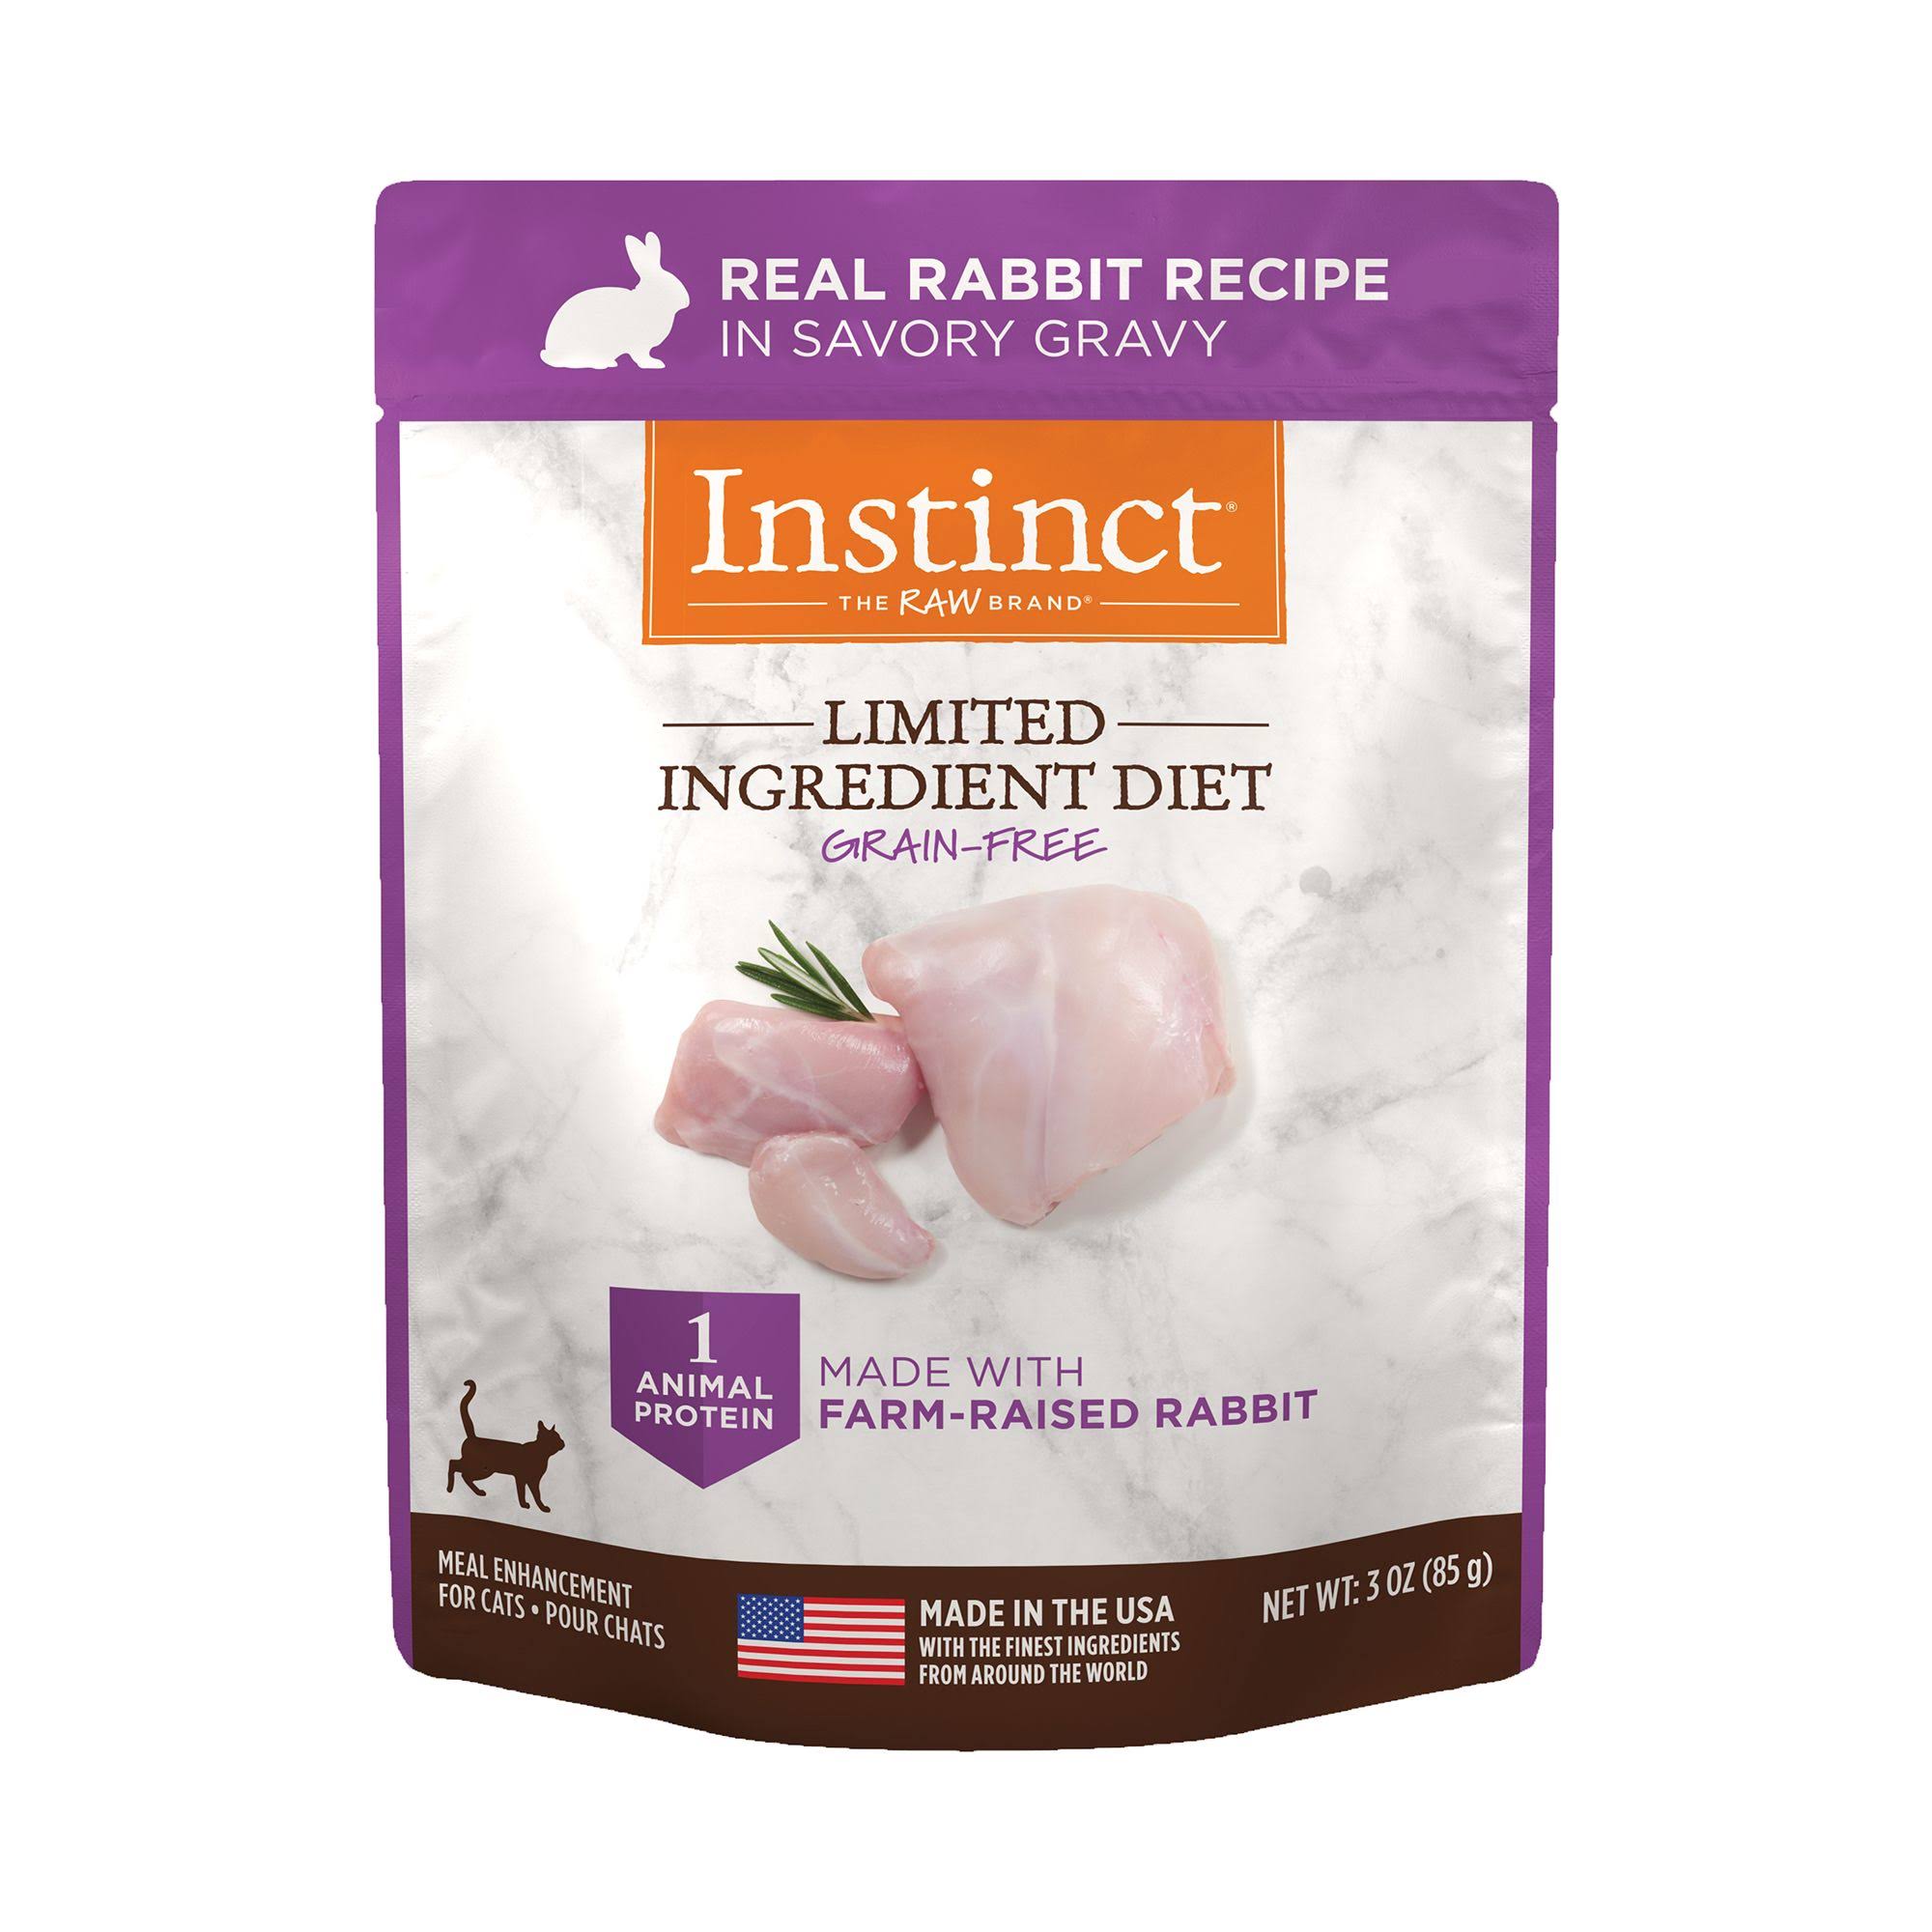 Instinct Limited Ingredient Diet Real Rabbit Recipe Grain-Free Wet Cat Food Topper - 3 oz